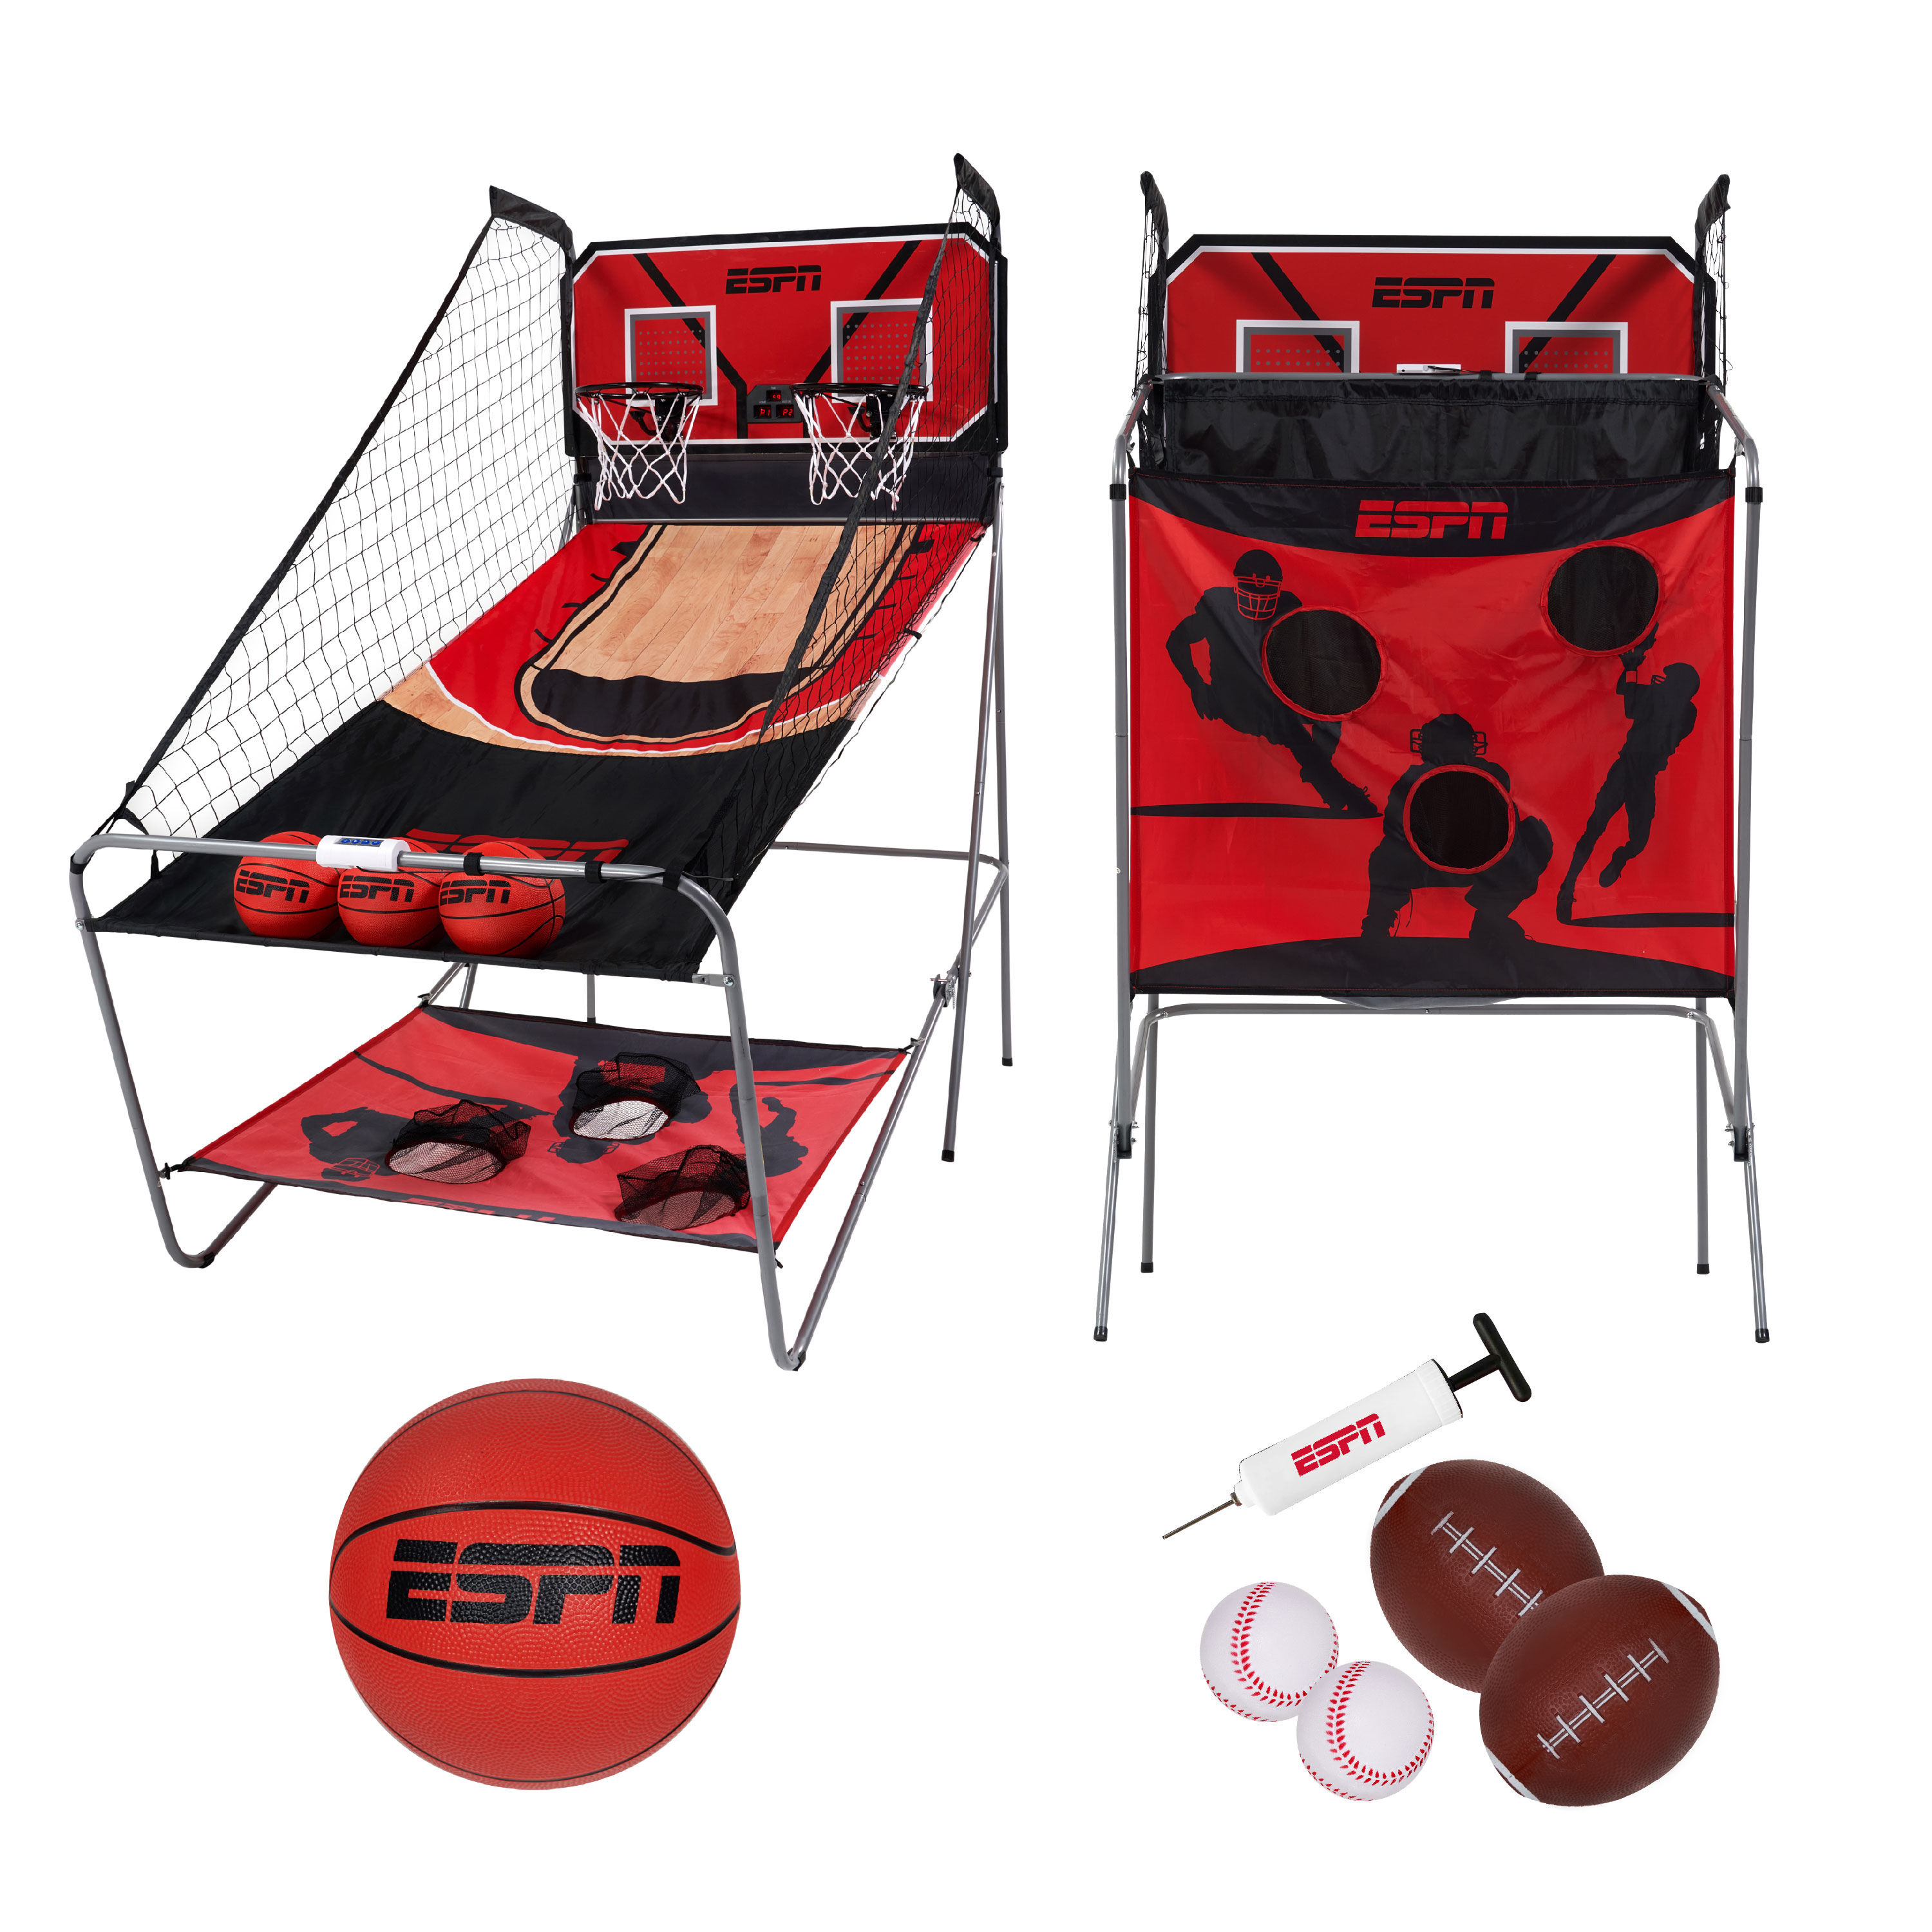 ESPN 3-in-1 Arcade Combo Basketball, Baseball, Football Game, Red - image 3 of 10